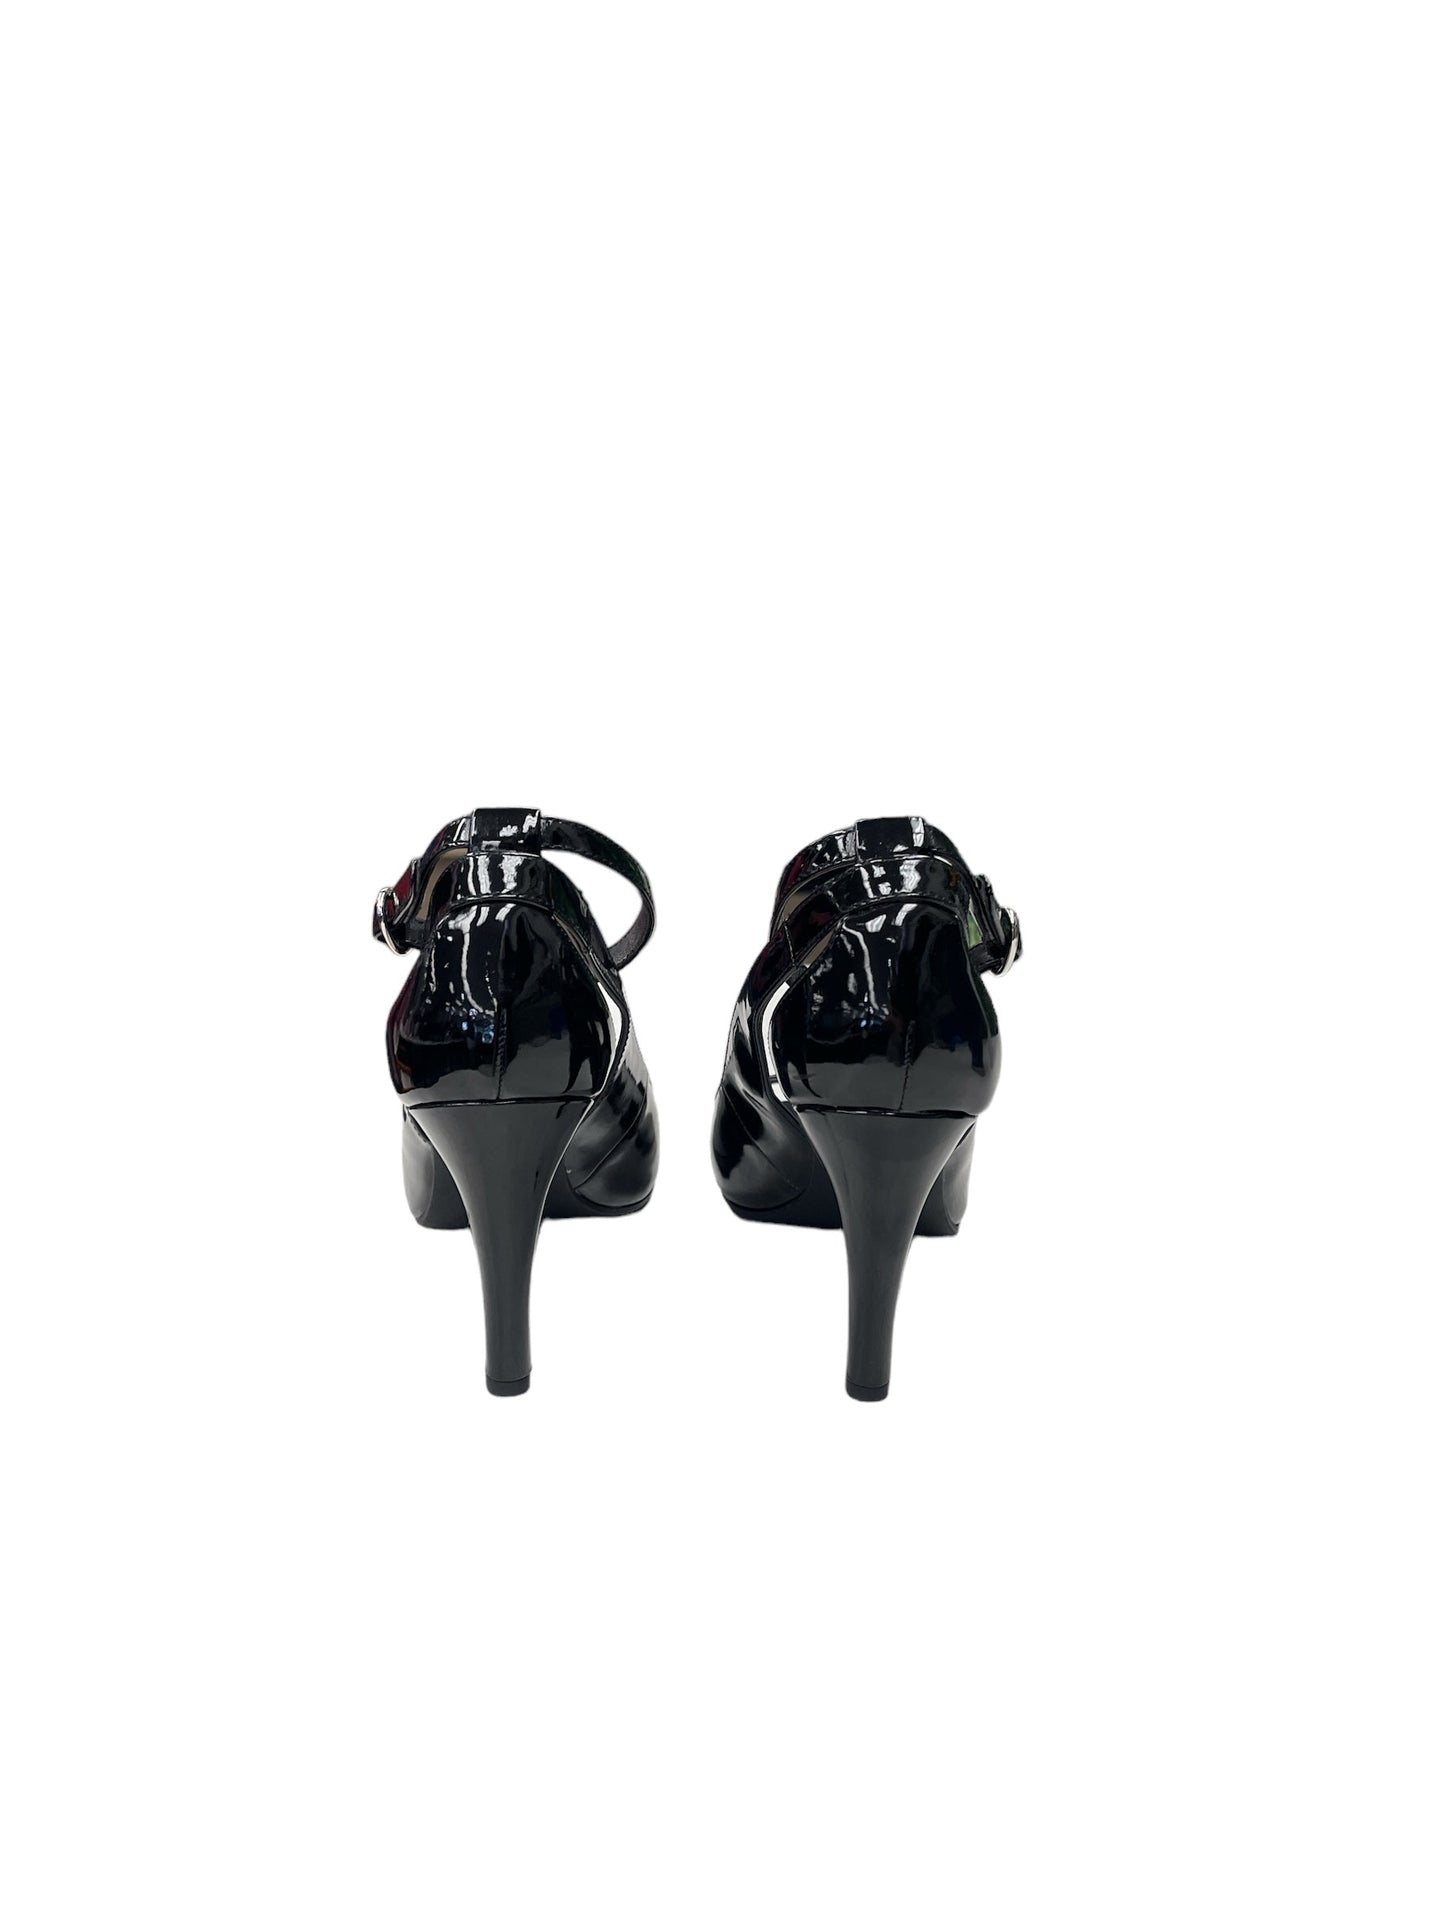 Black Shoes Heels Stiletto Franco Sarto, Size 7.5